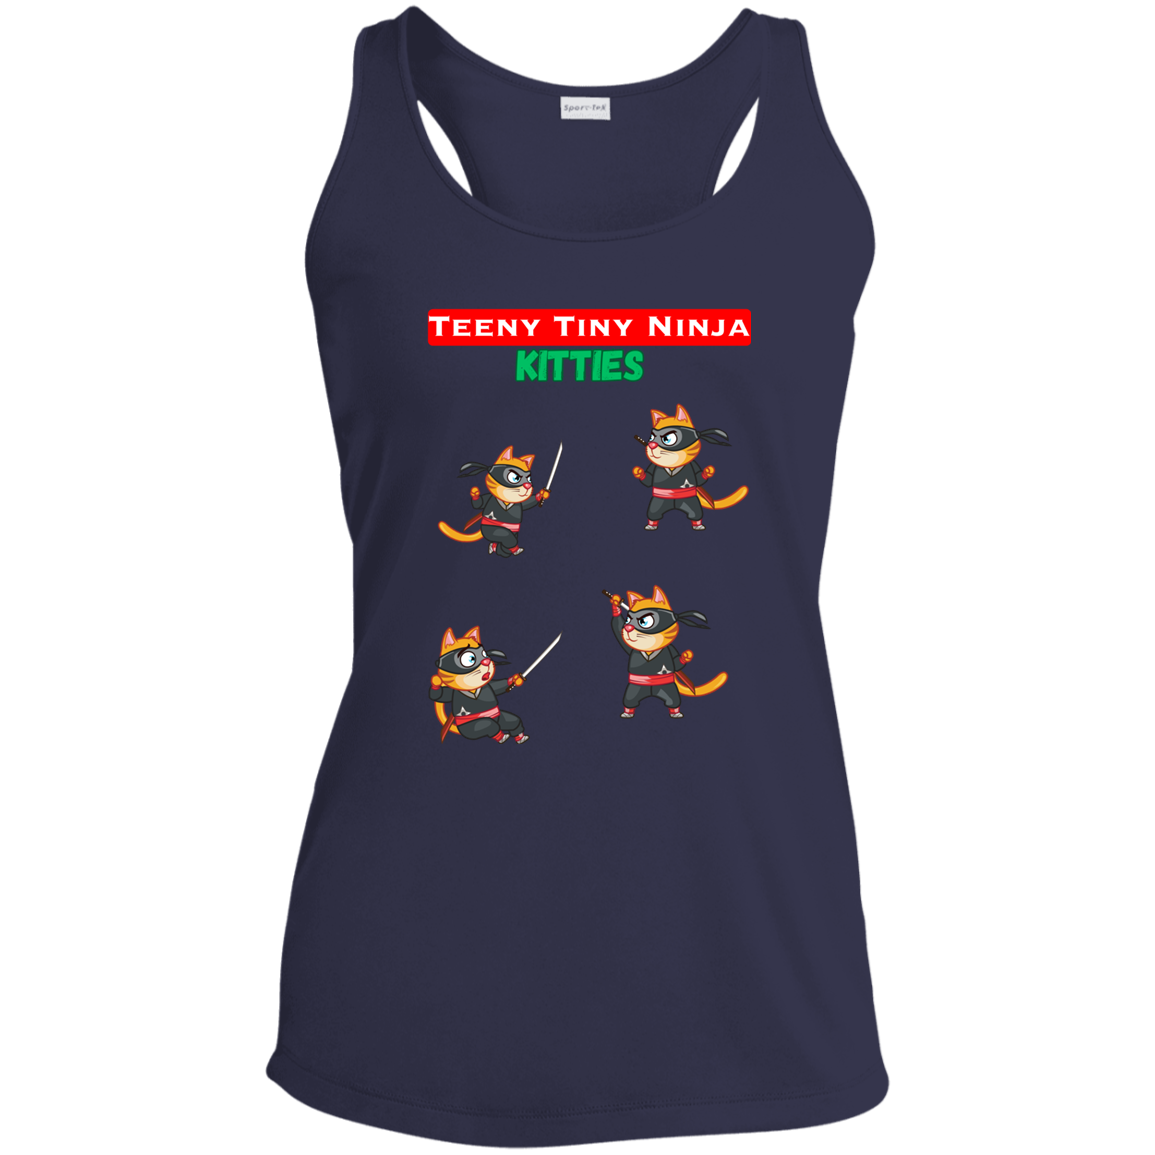 Teeny Tiny Ninja Kitties - Camiseta sin mangas con espalda cruzada para mujer